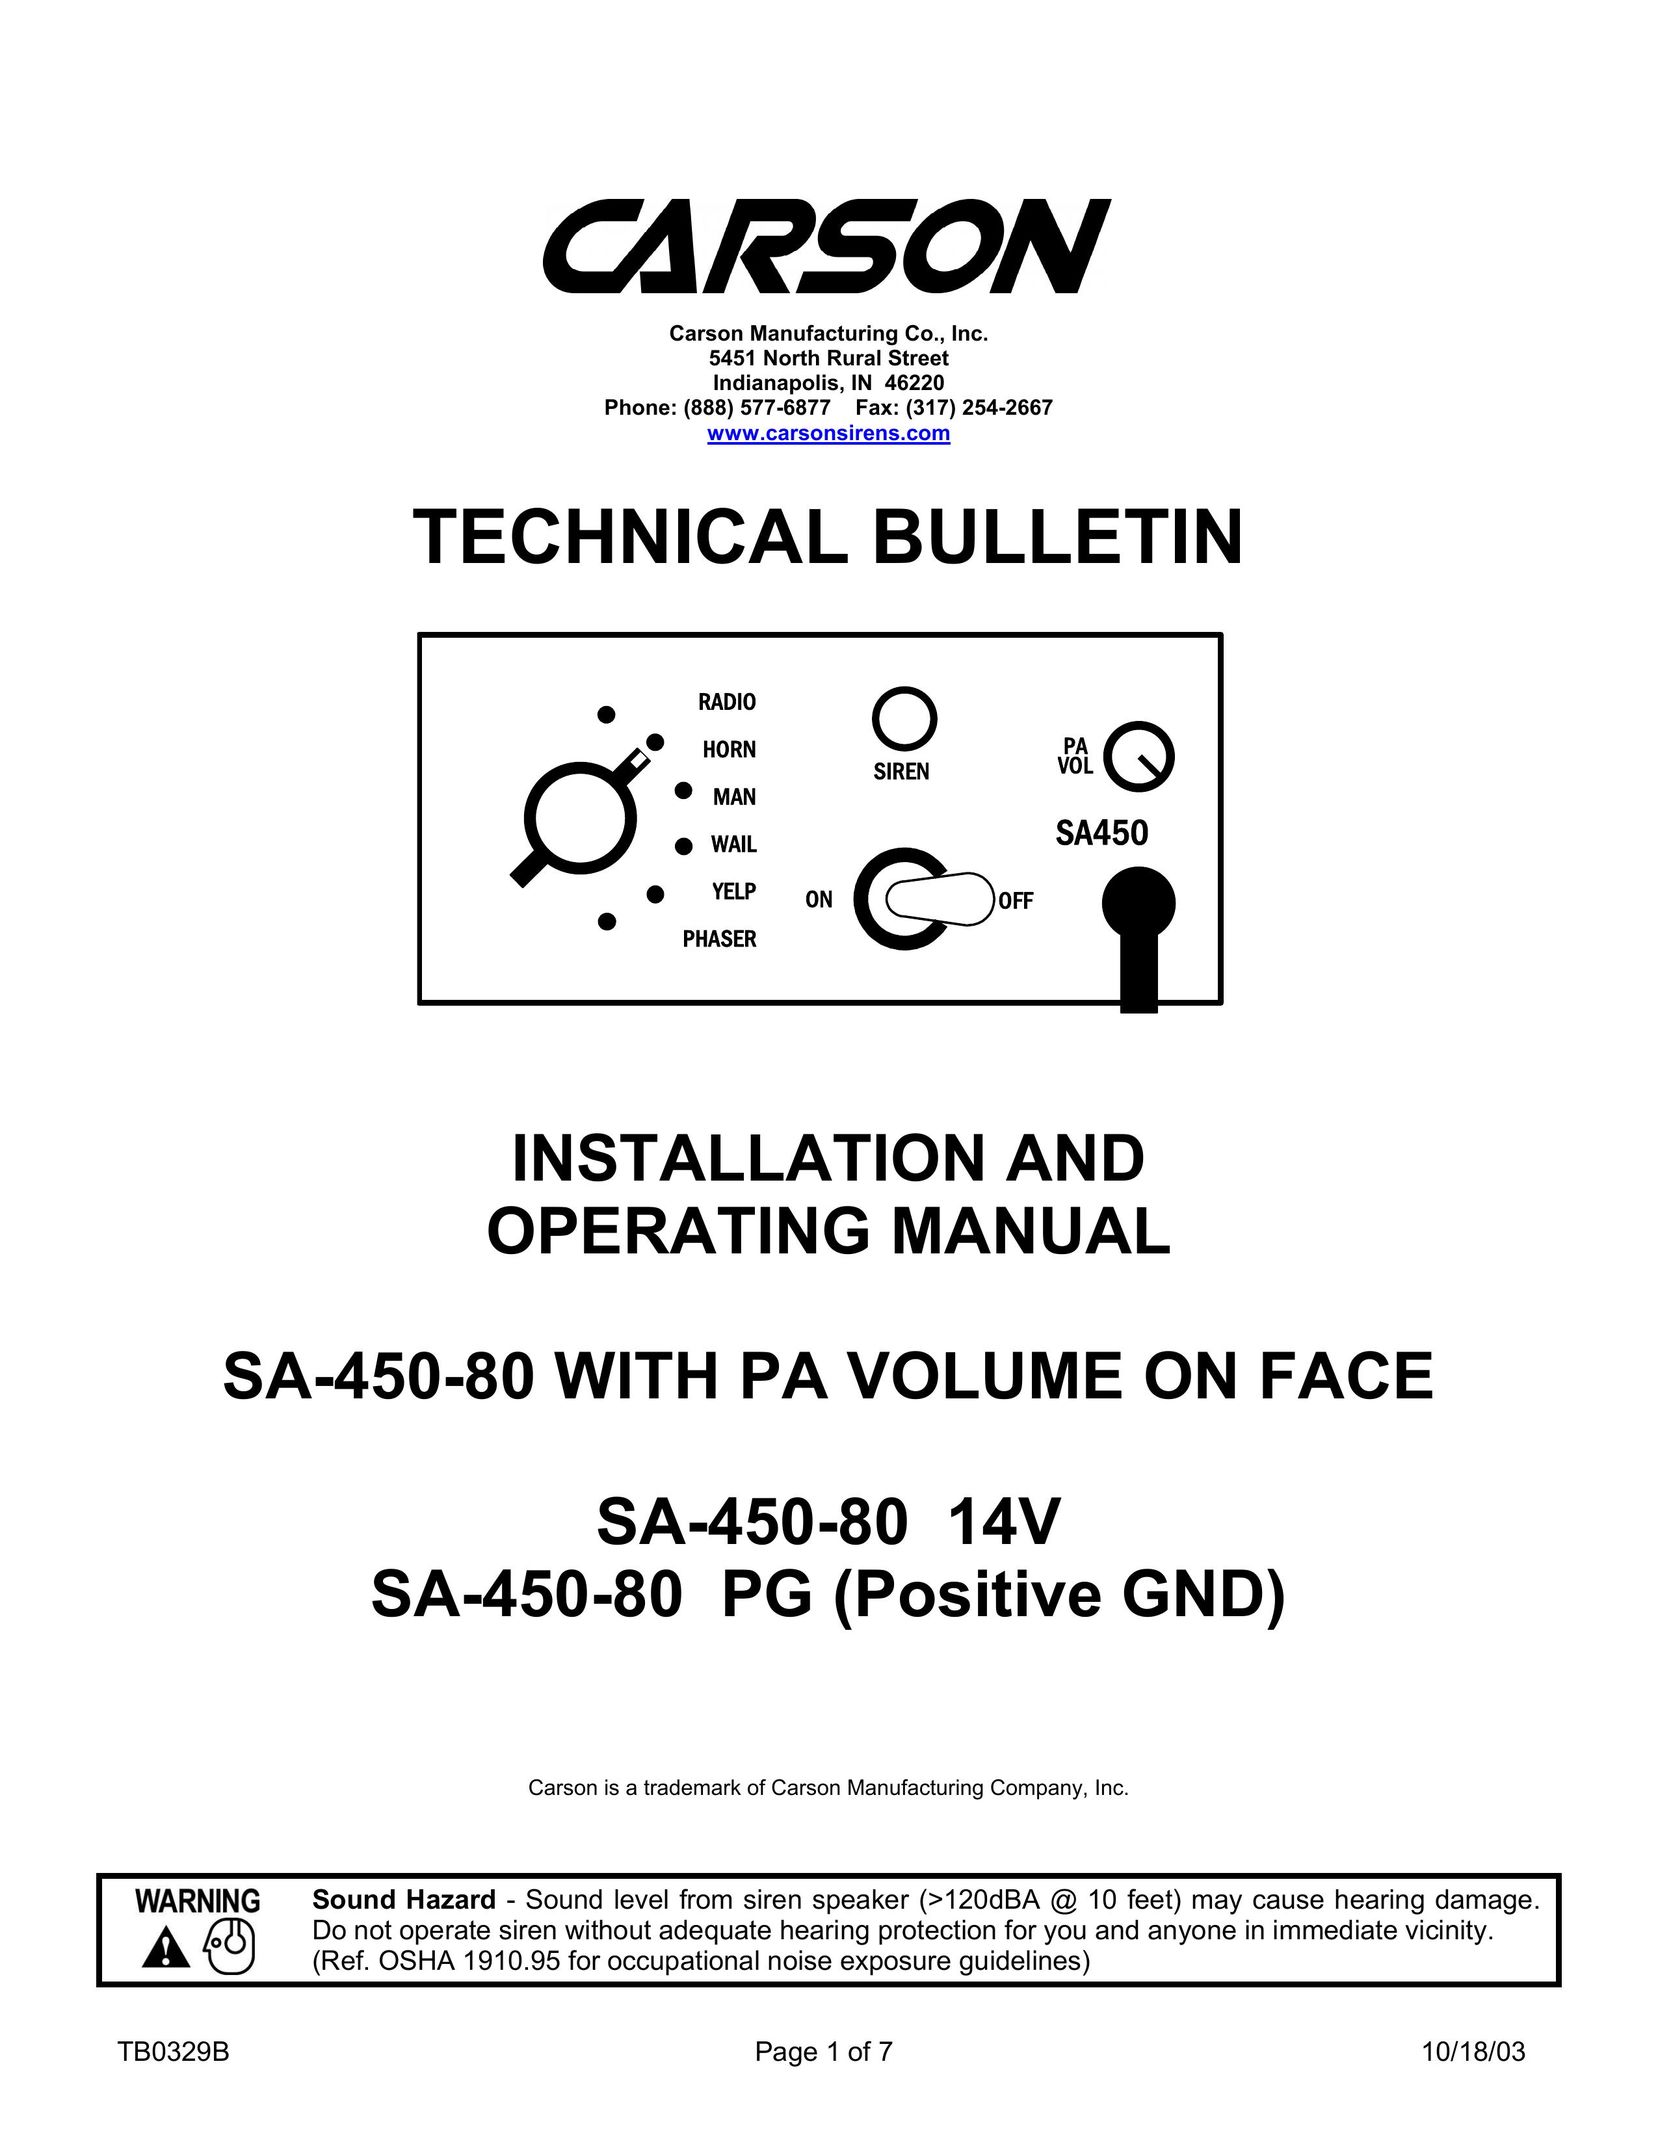 Carson SA-450-80 14V Stereo Amplifier User Manual